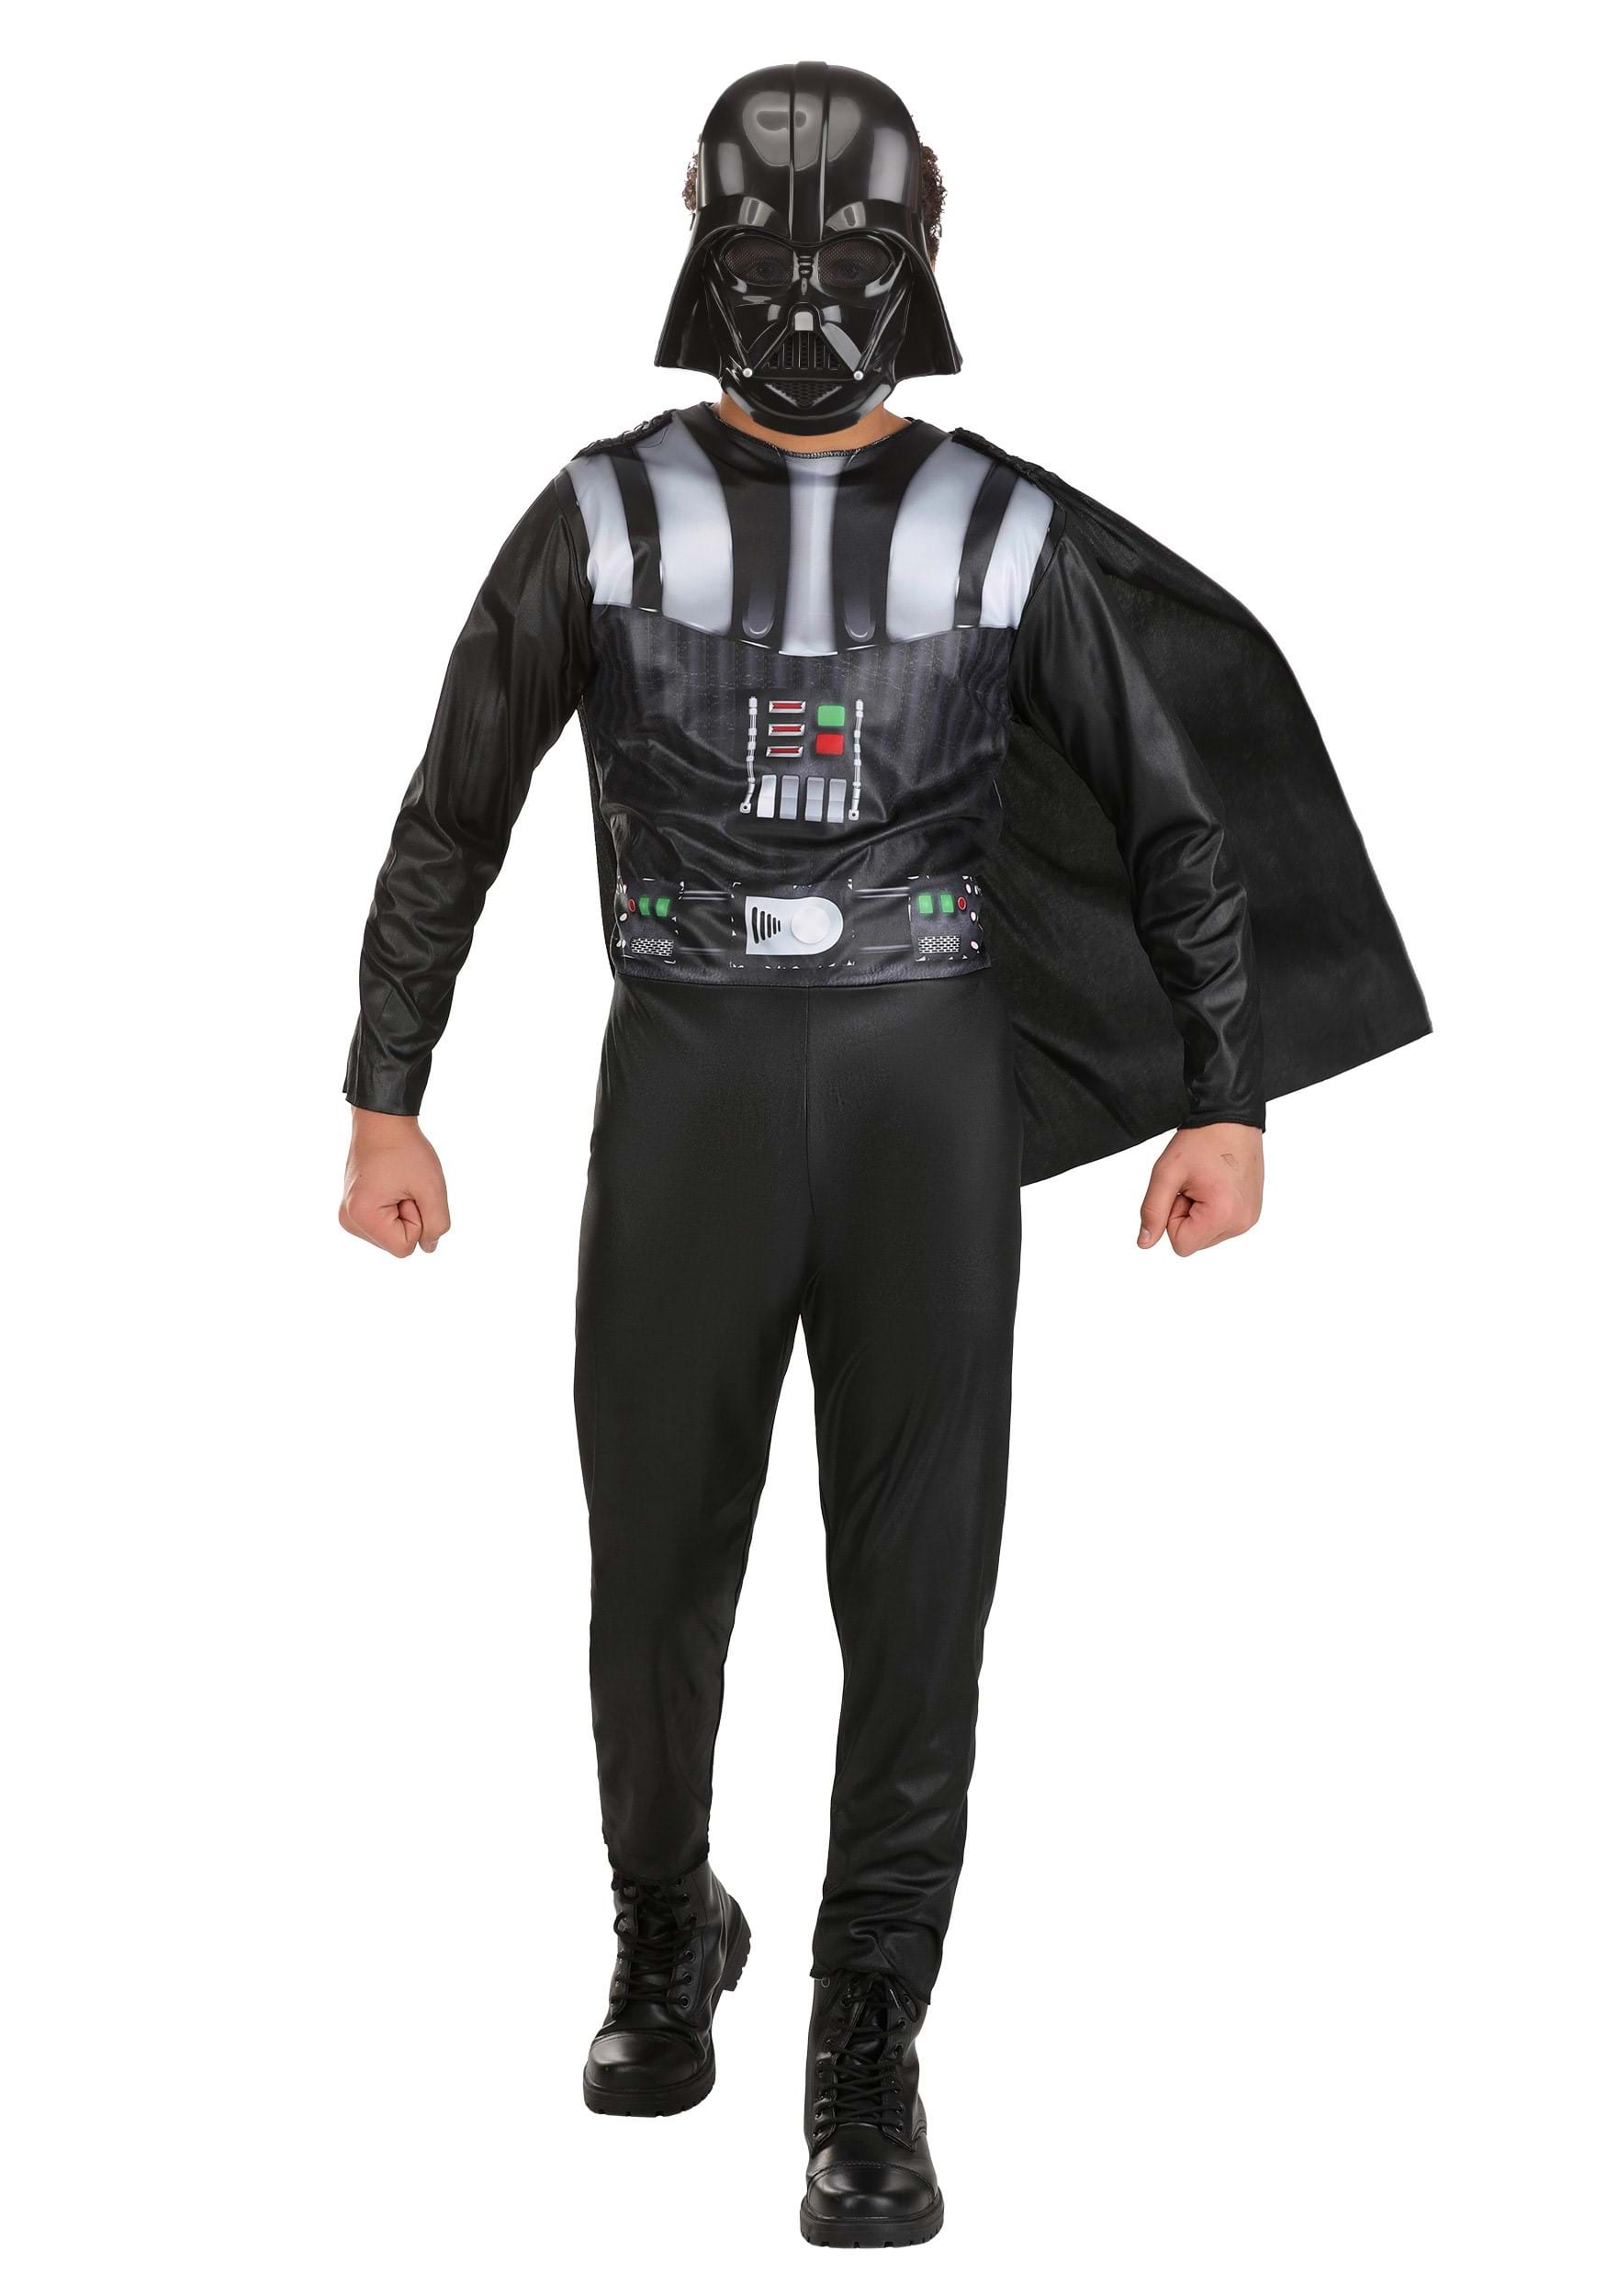 Photos - Fancy Dress Jazwares Star Wars Darth Vader Costume for Kids Black/Gray JWC0727 